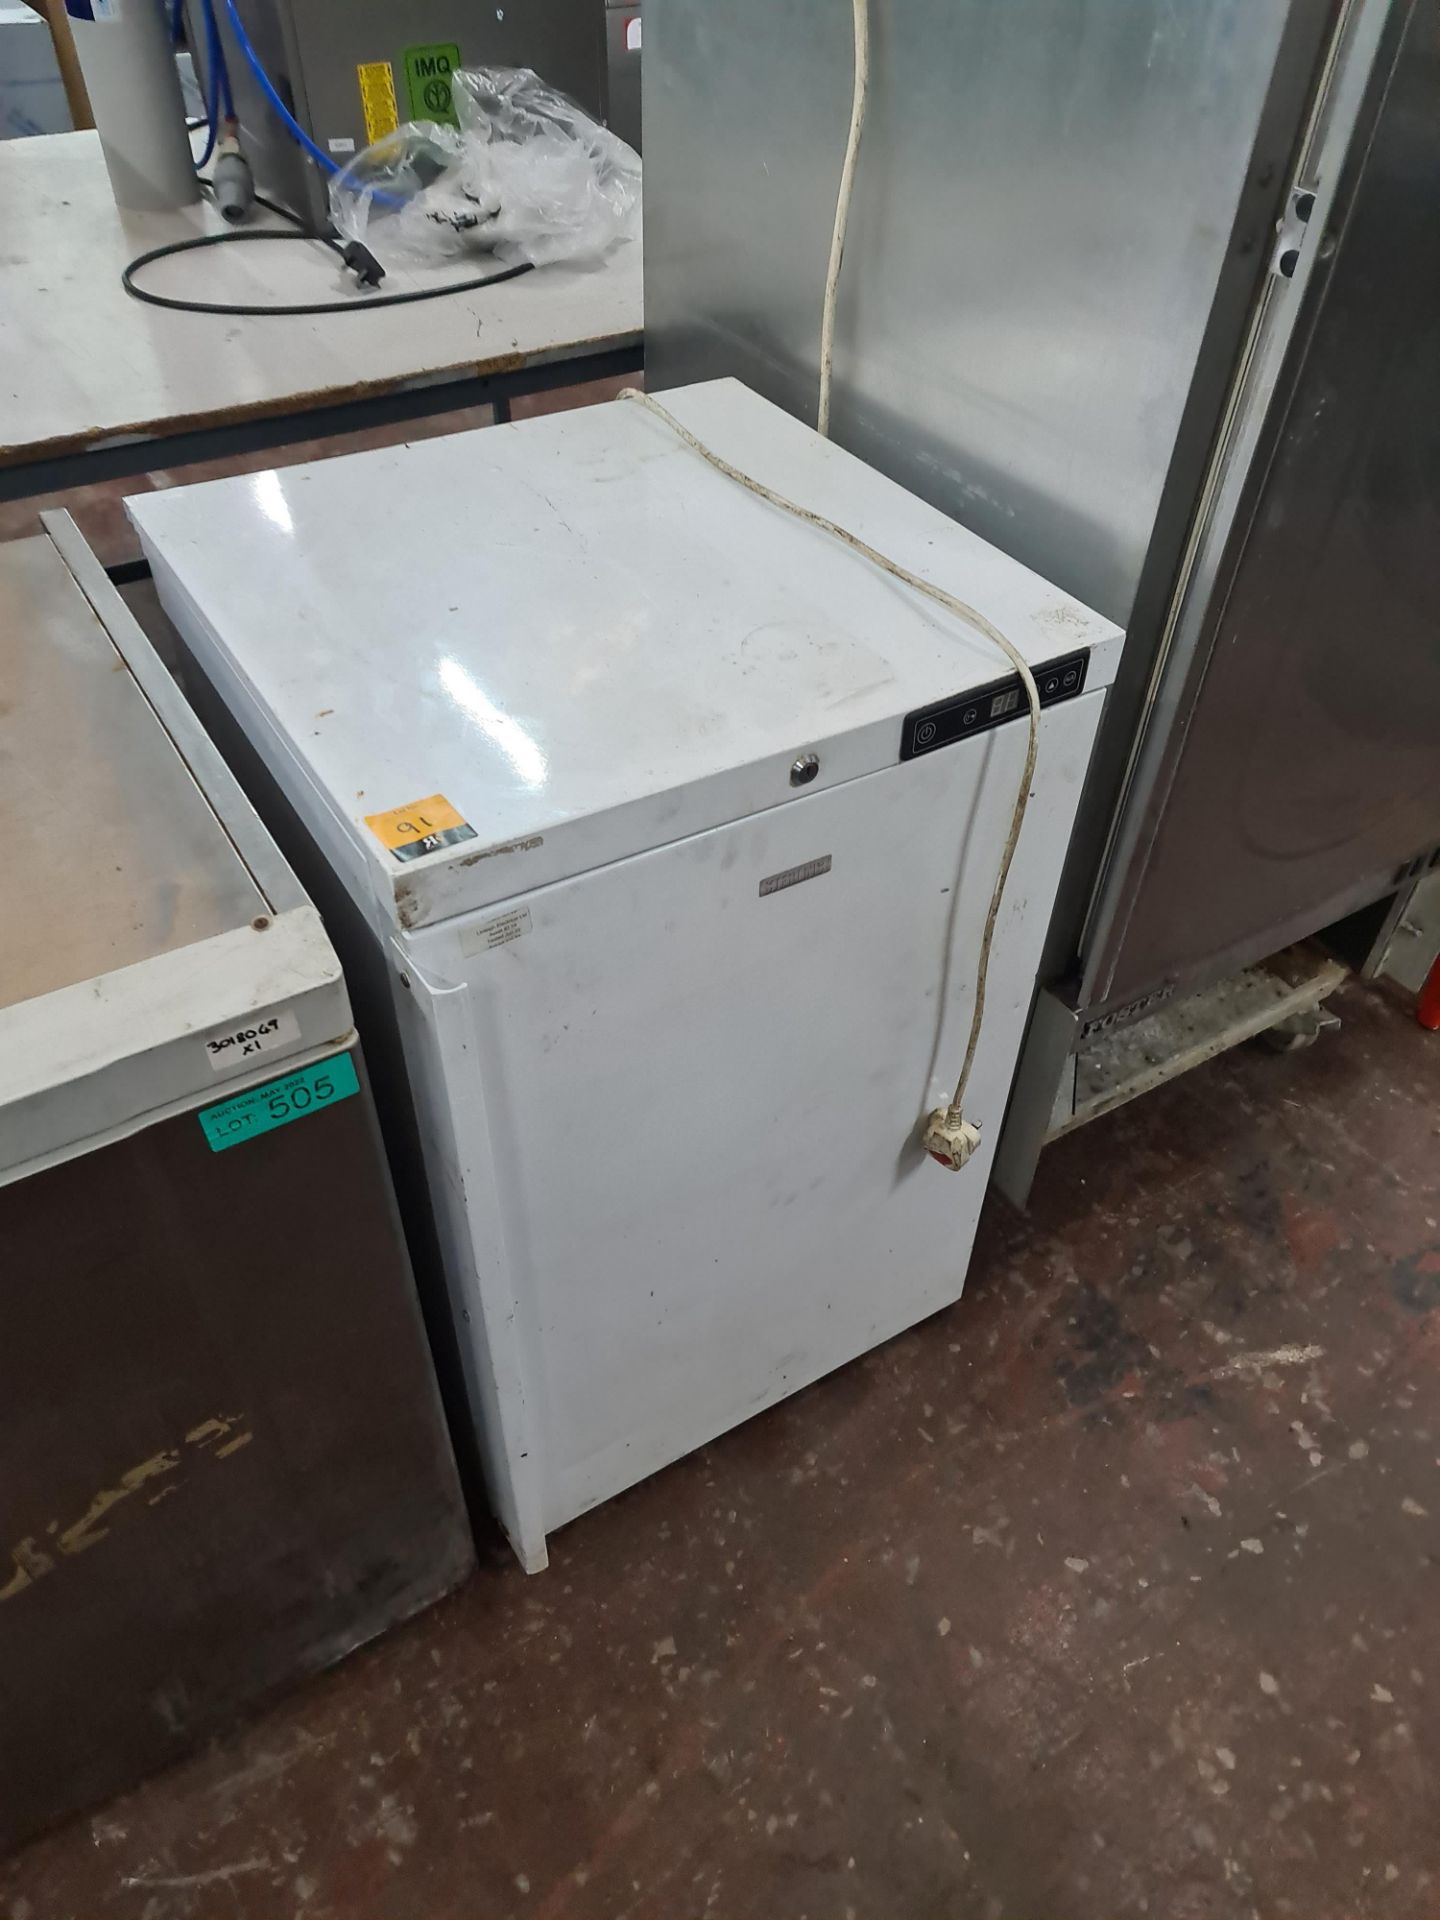 White undercounter freezer, model SPZ 751-116L